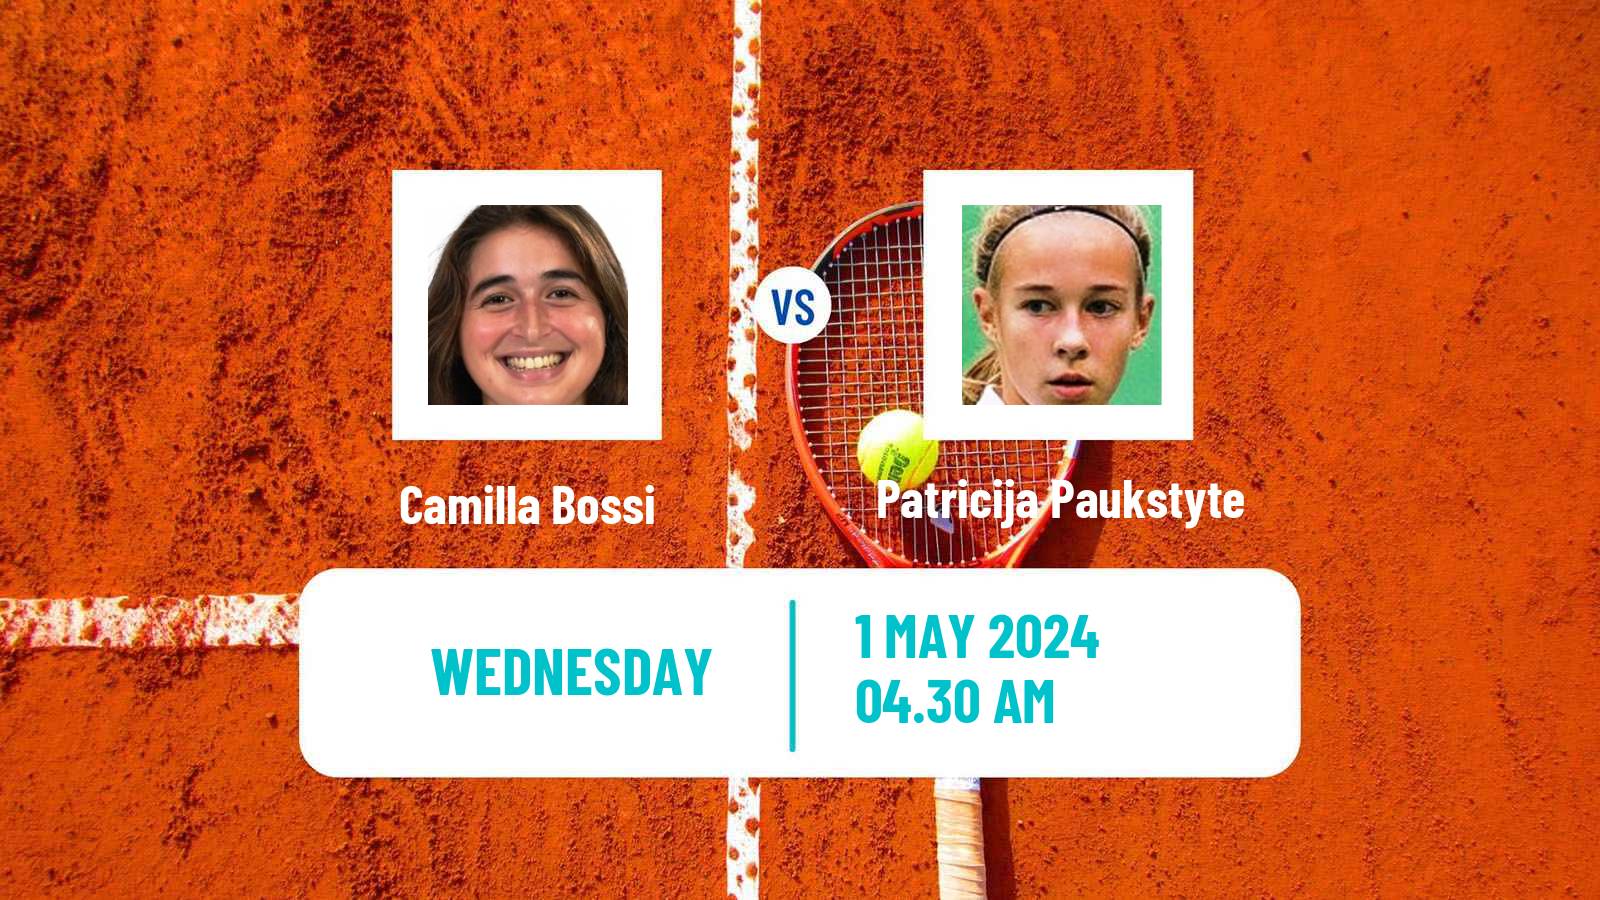 Tennis ITF W15 Monastir 16 Women Camilla Bossi - Patricija Paukstyte